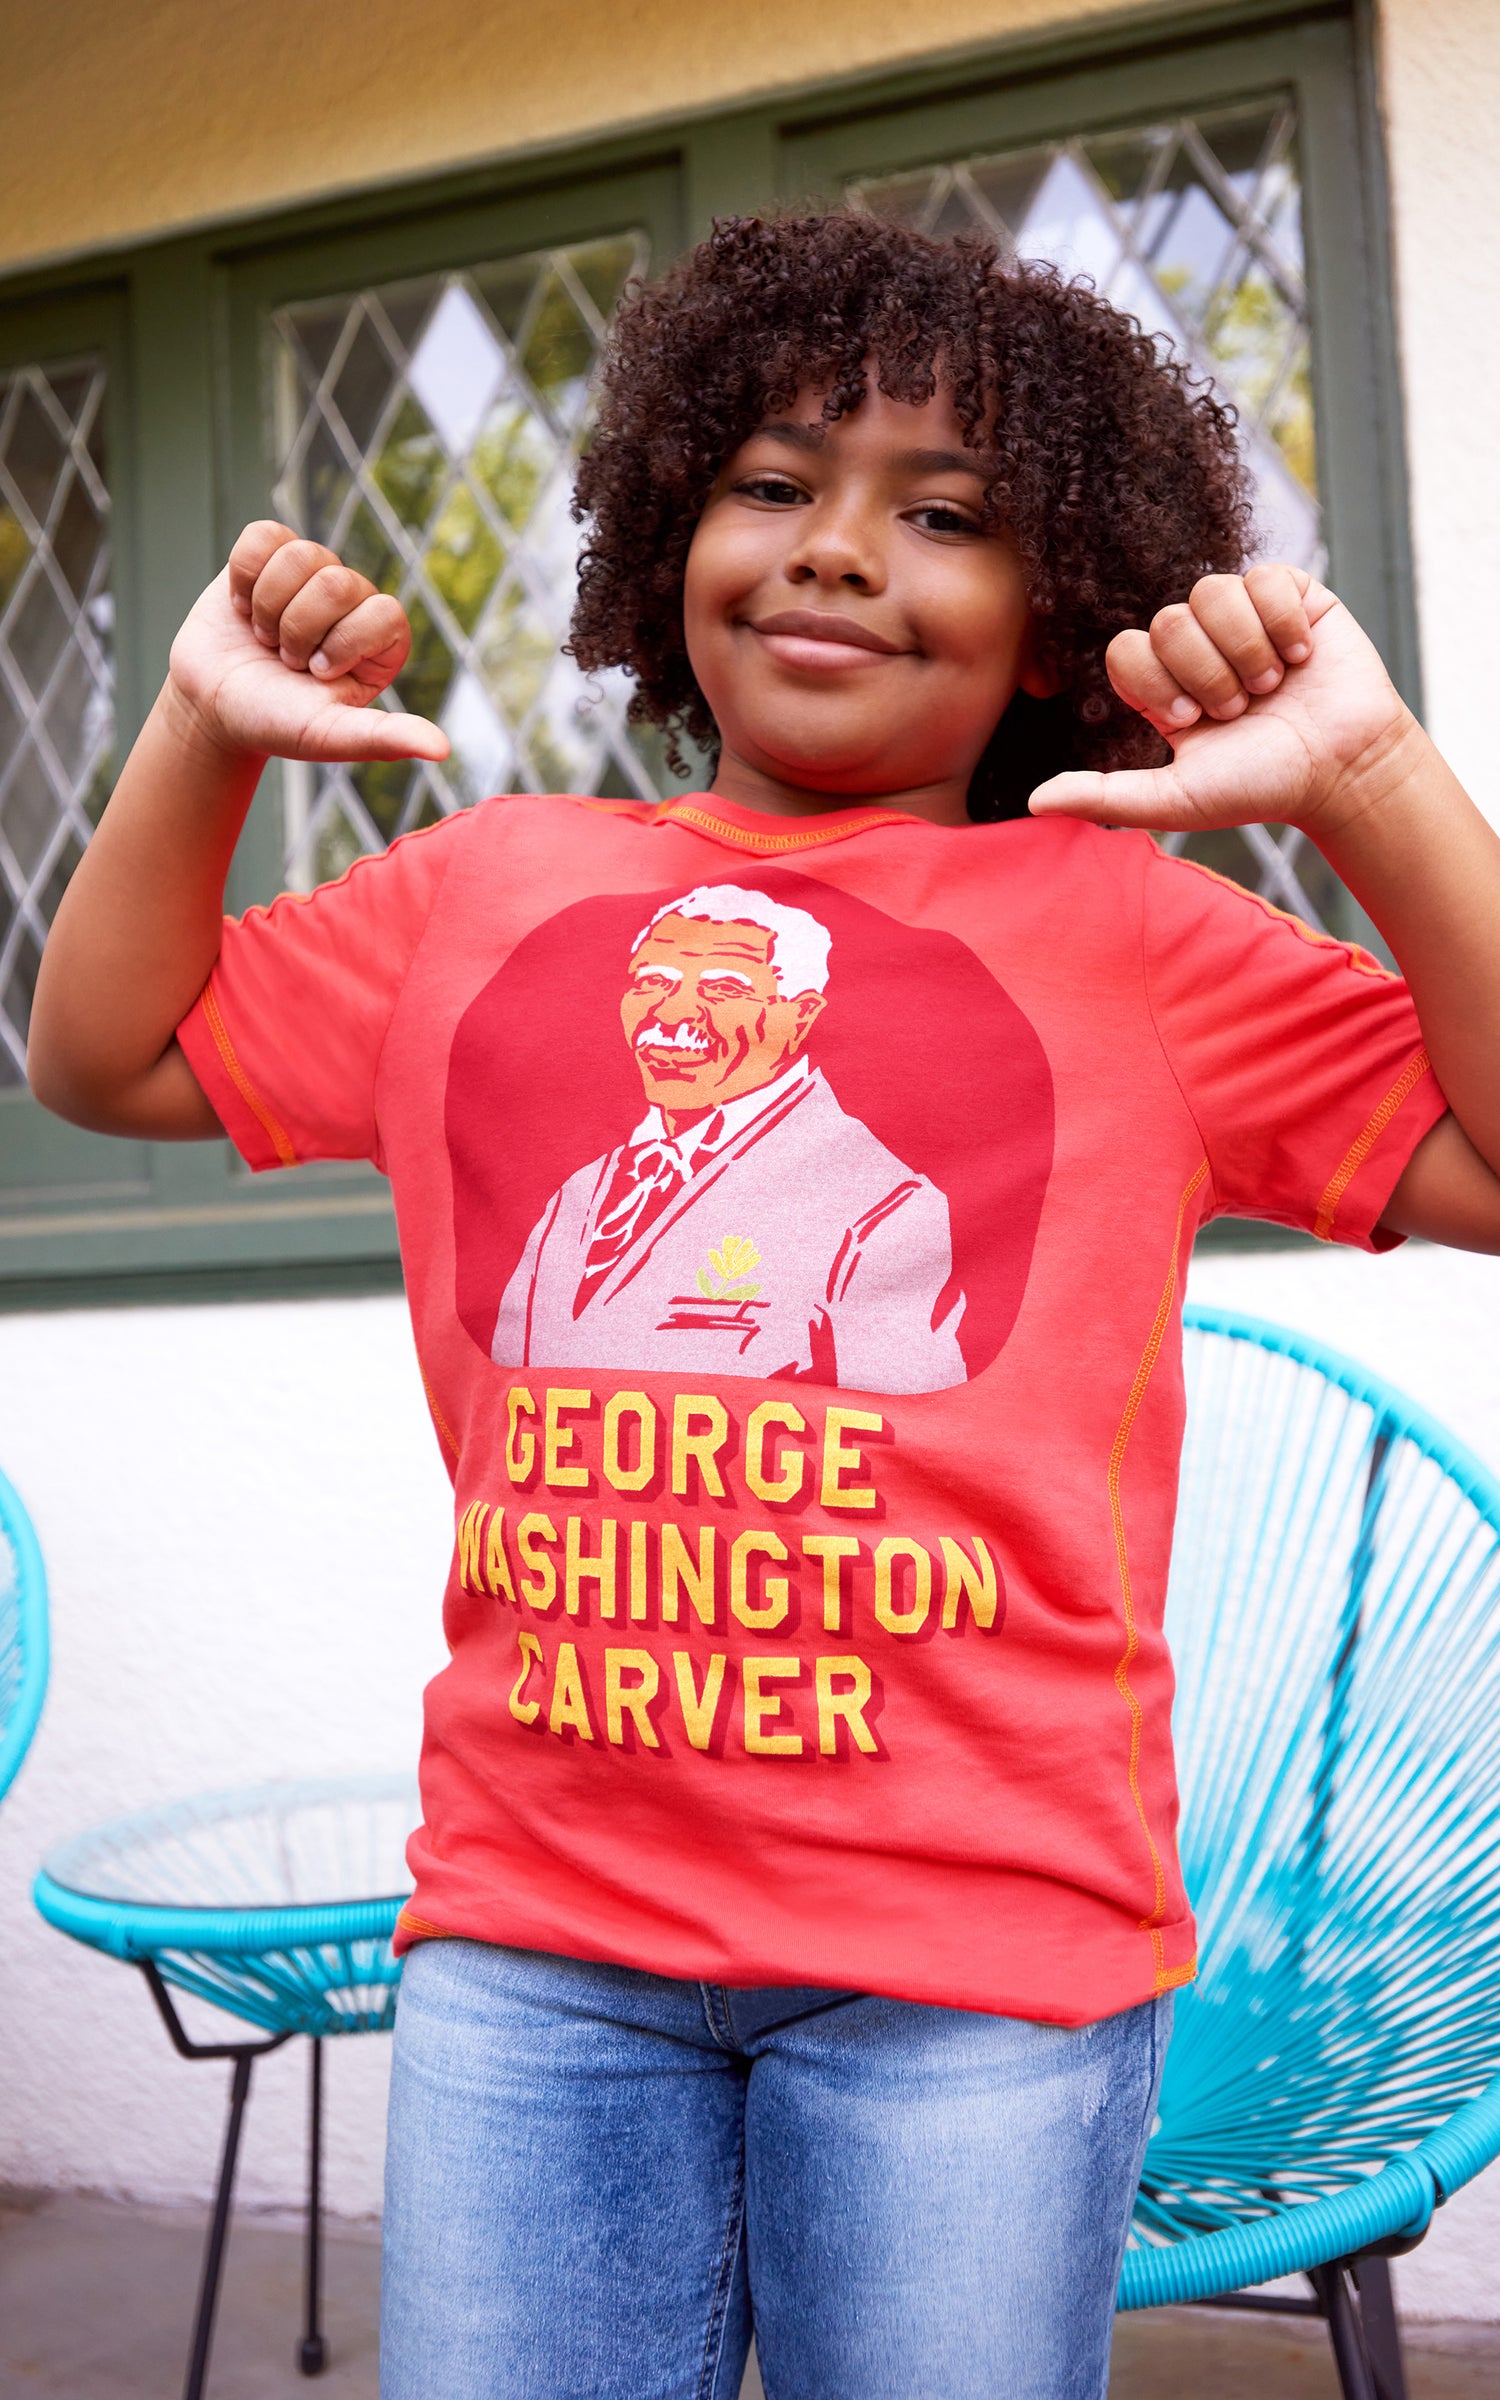 KID WEARING ORANGE T-SHIRT WITH "GEORGE WASHINGTON CARVER"